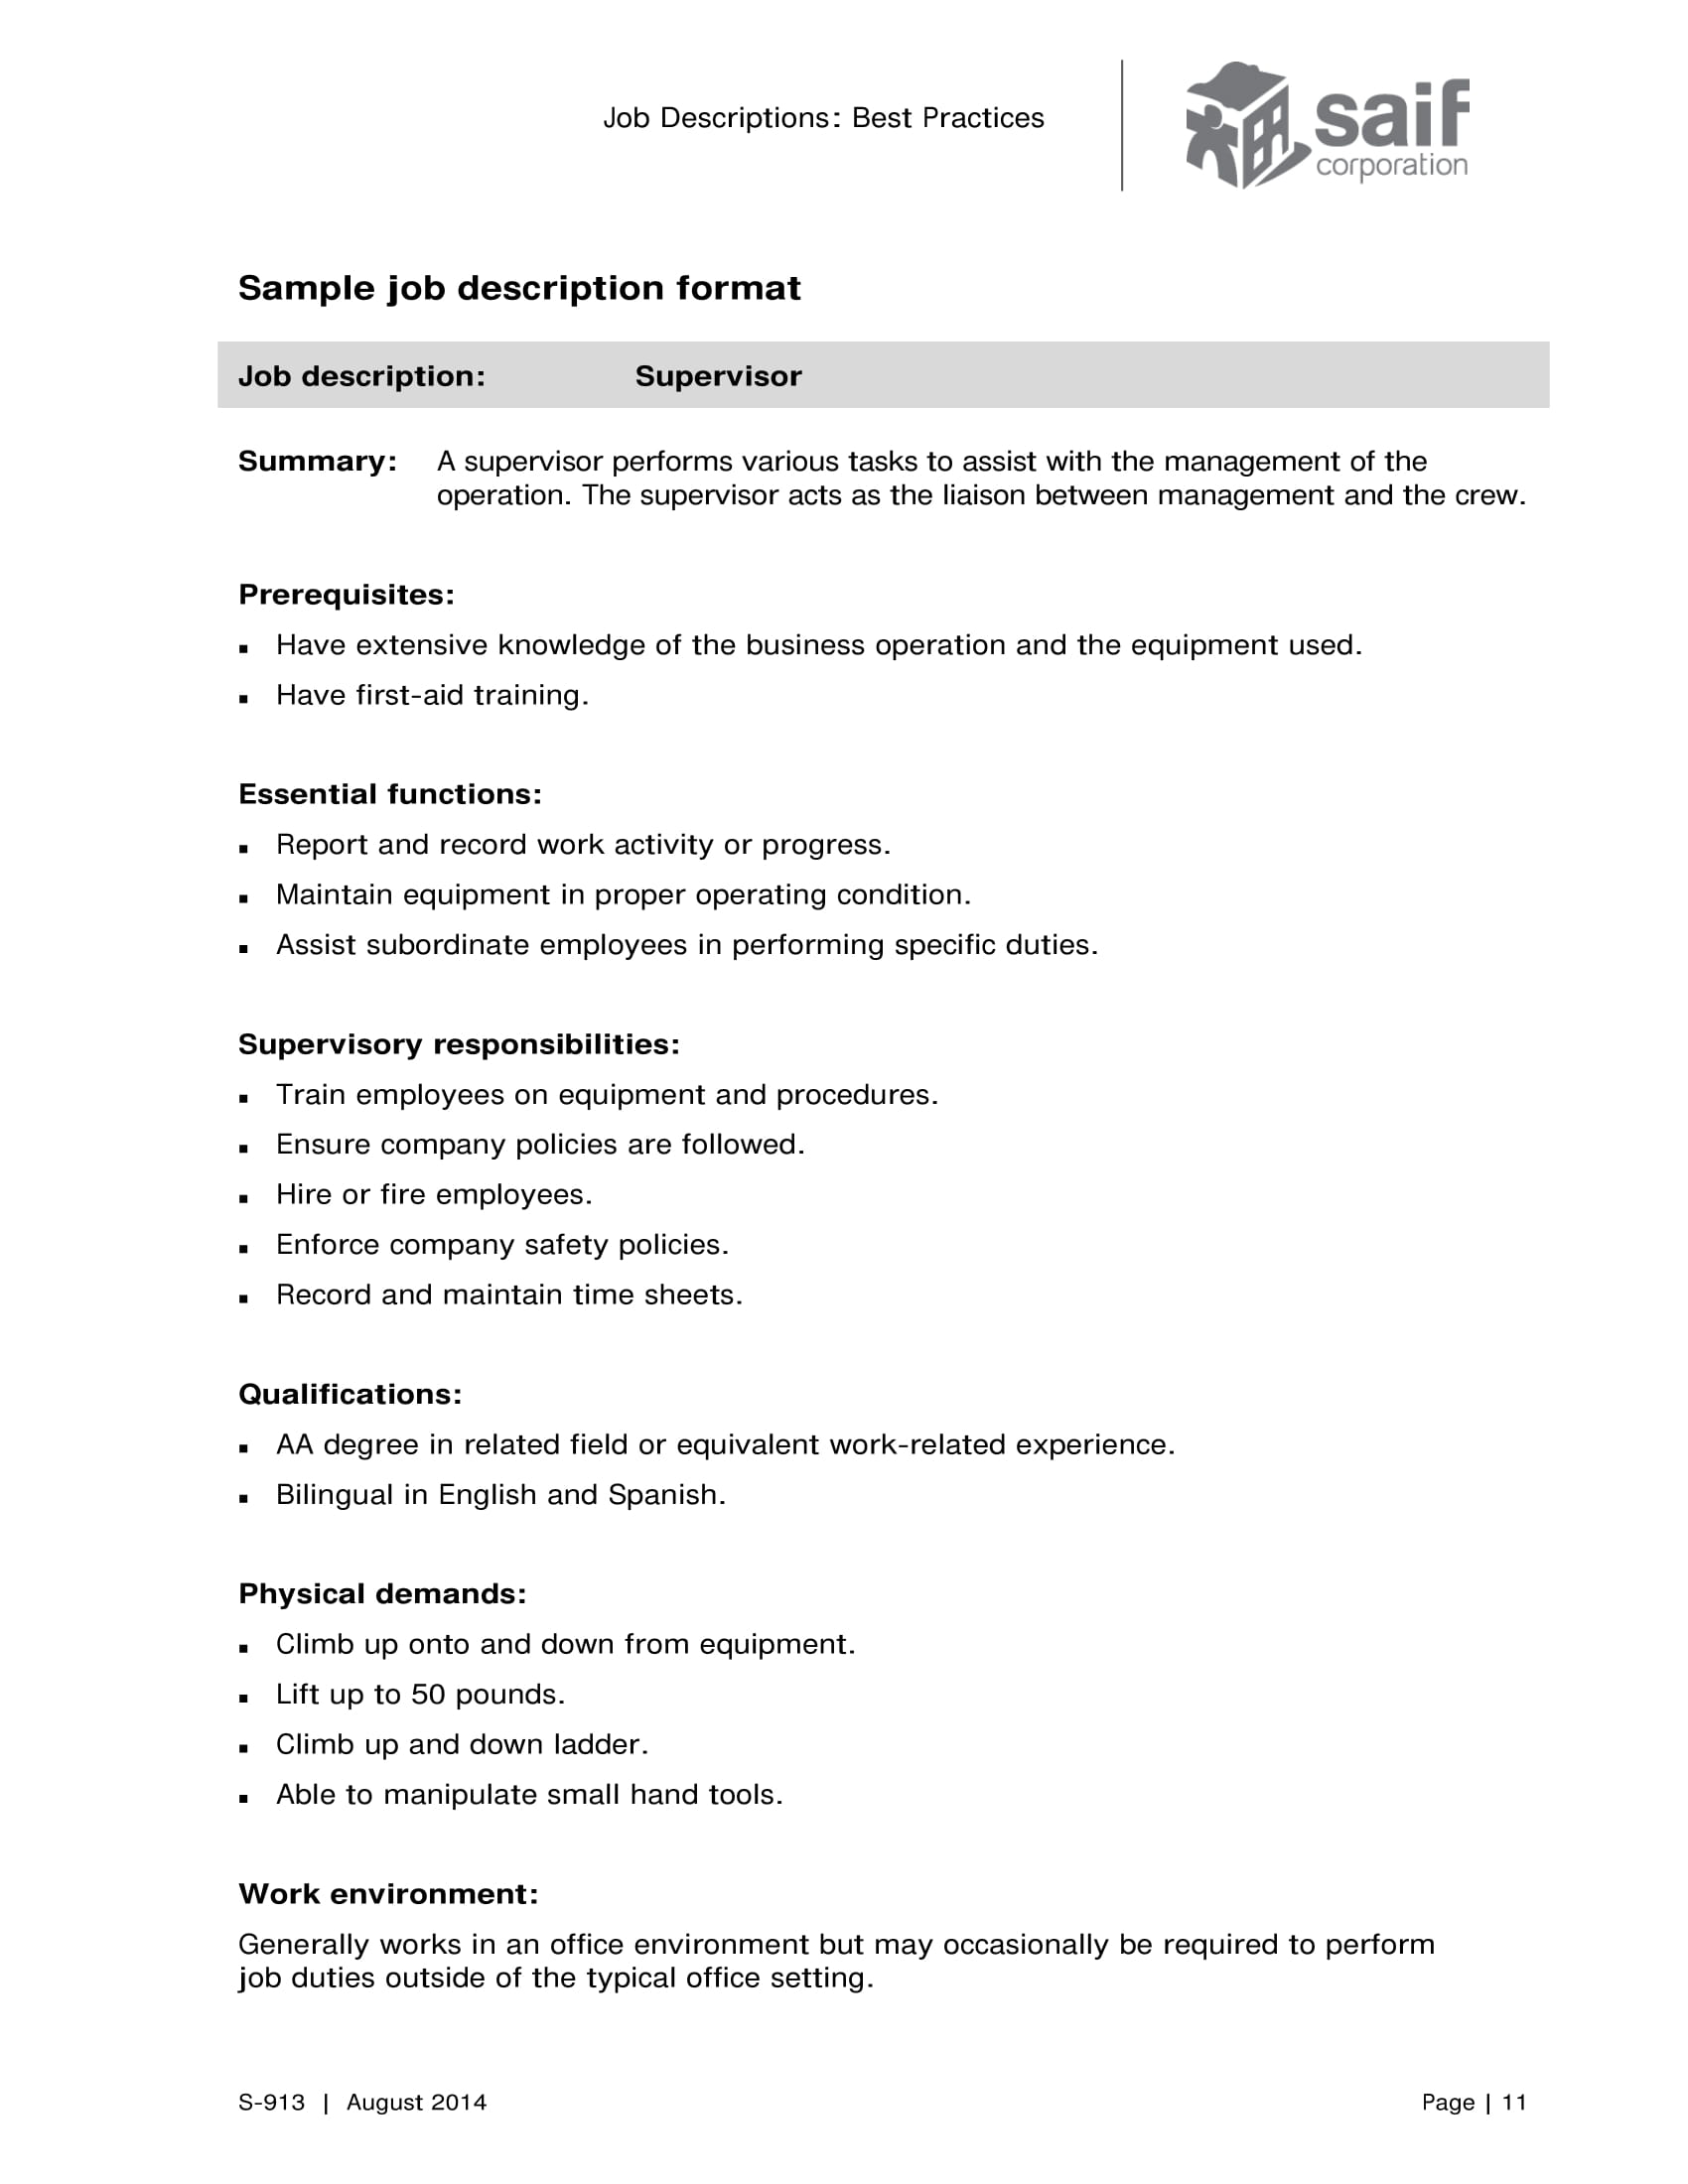 10+ Job Summary Examples - PDF | Examples